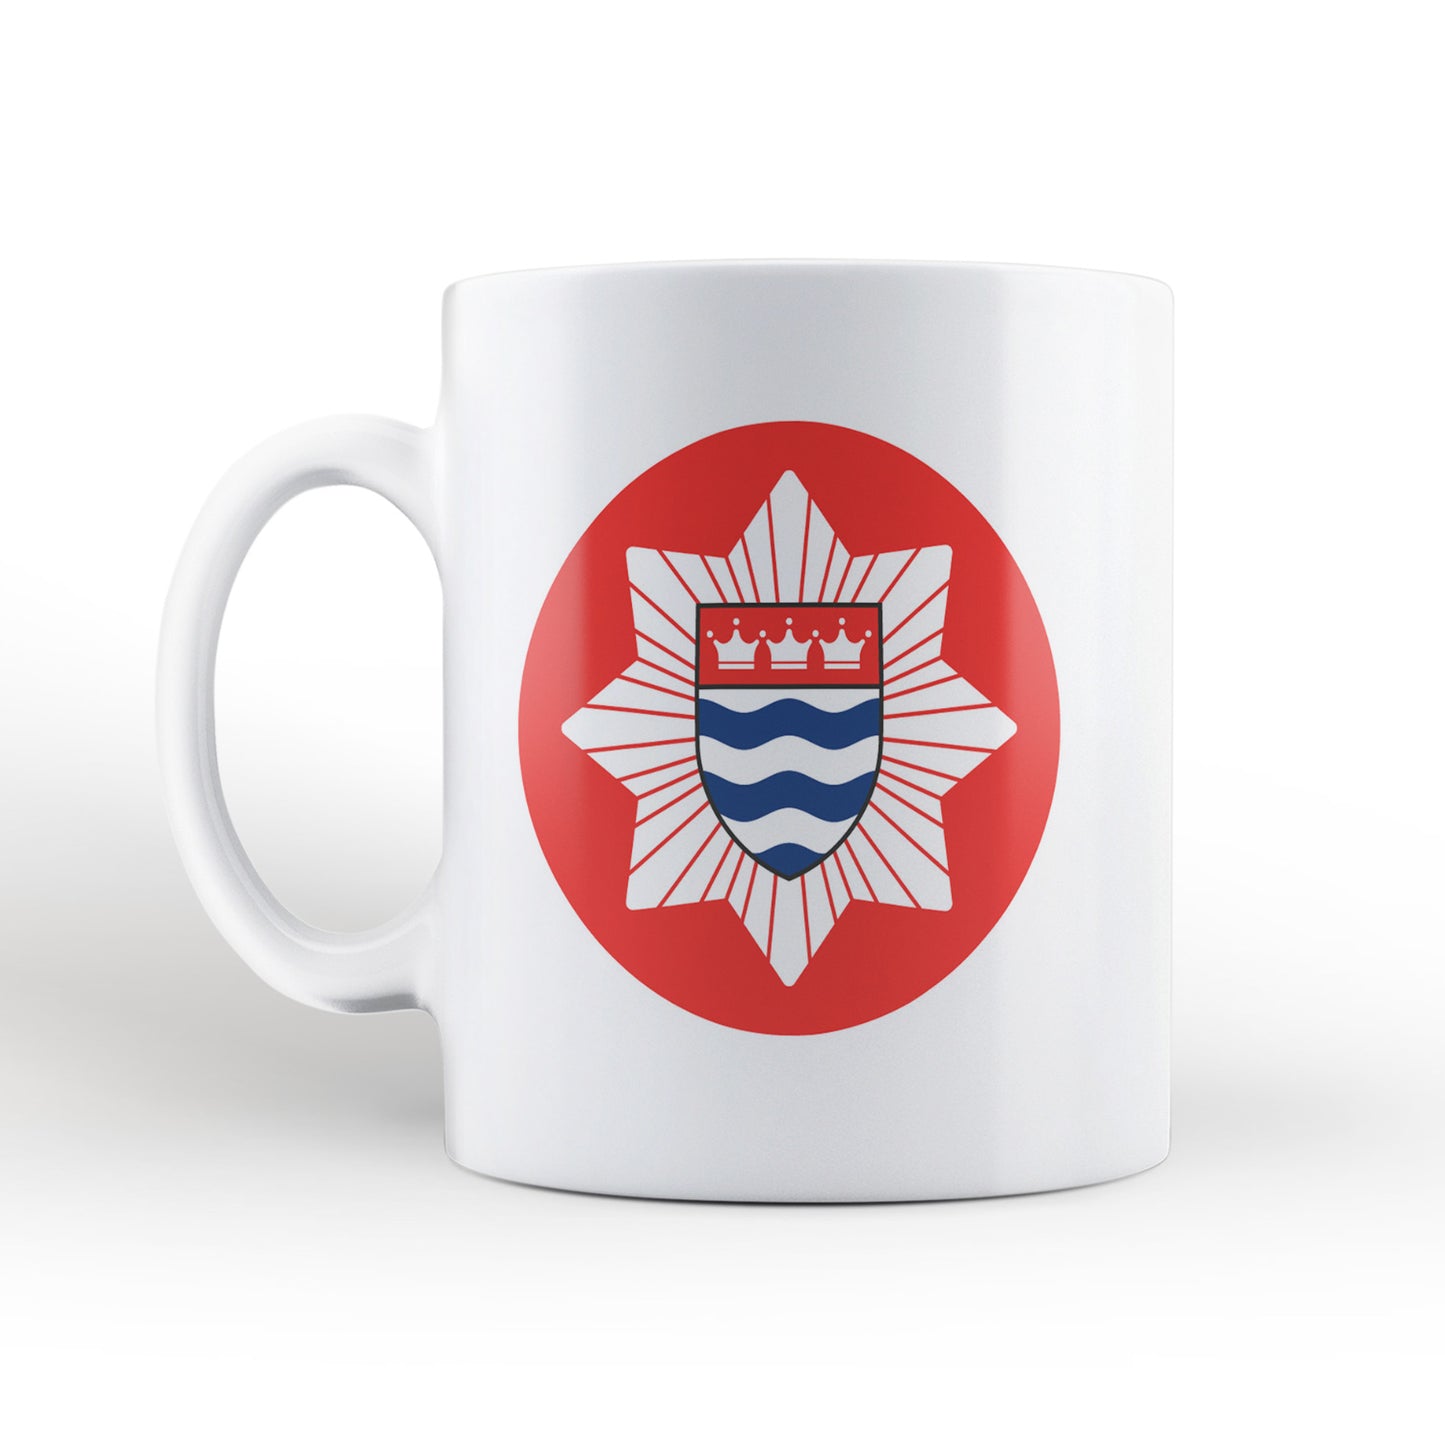 LFB Red Badge Mug